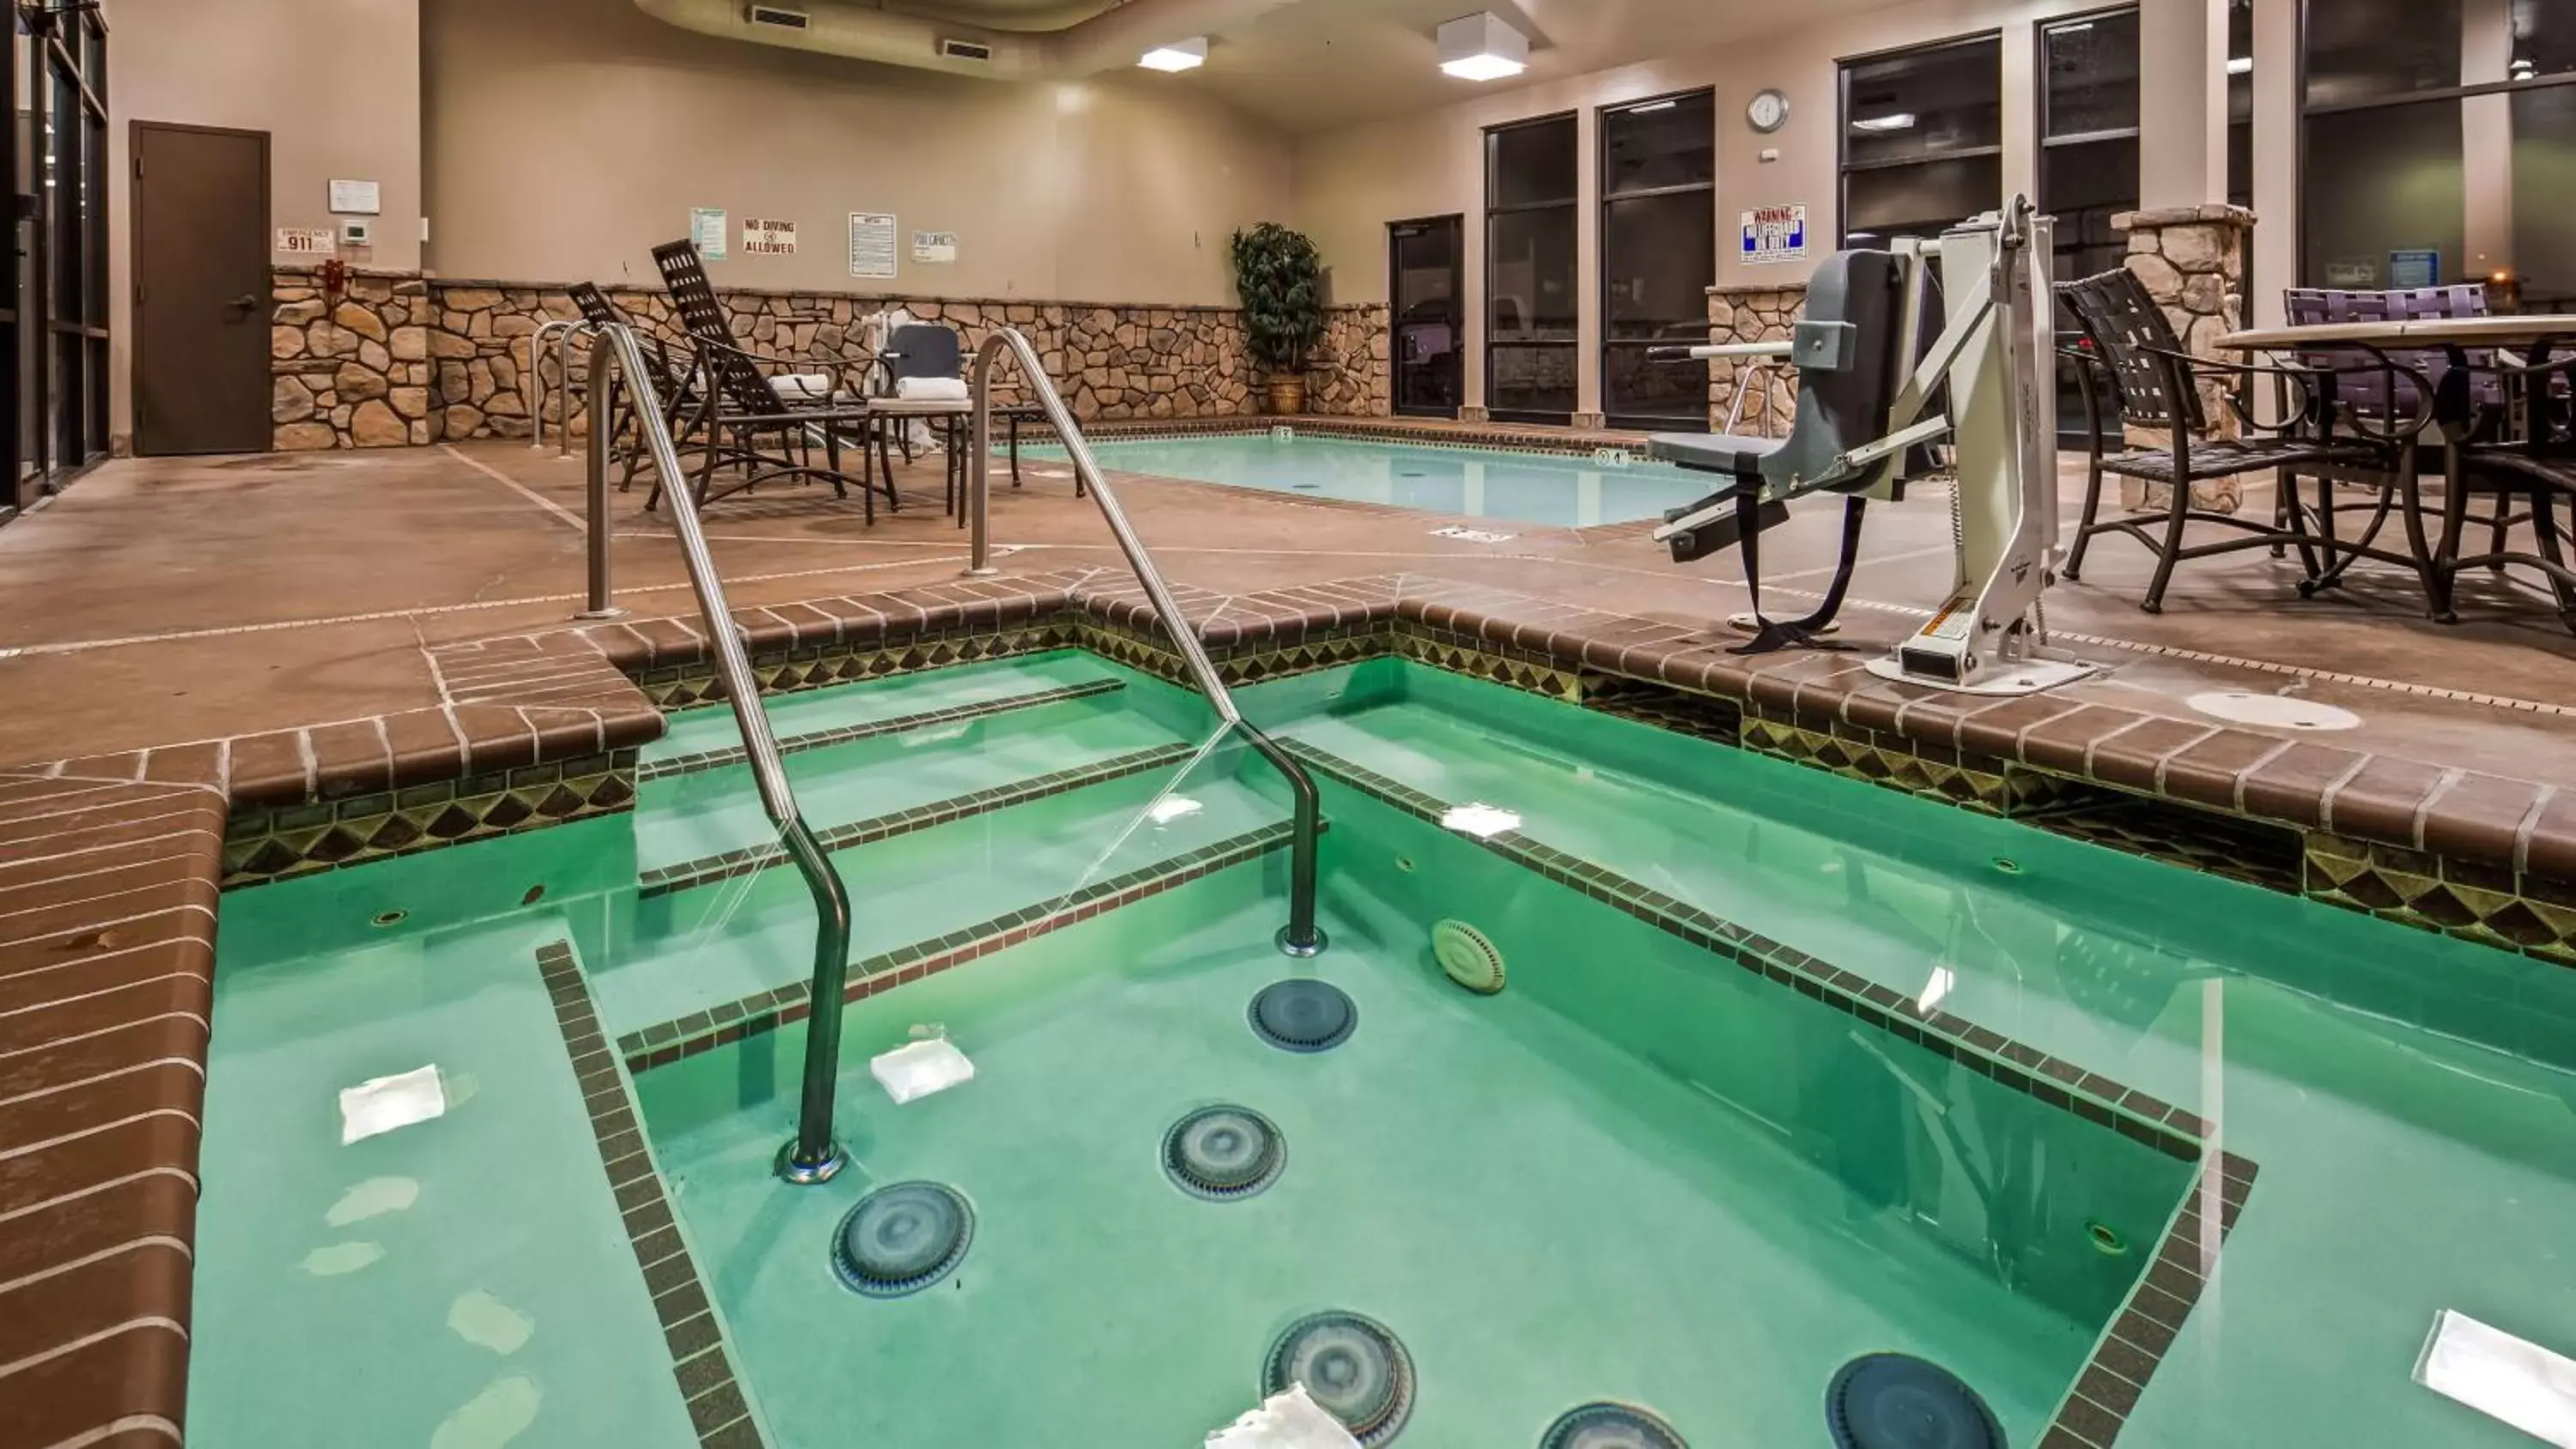 On site, Swimming Pool in Best Western PLUS Cimarron Hotel & Suites